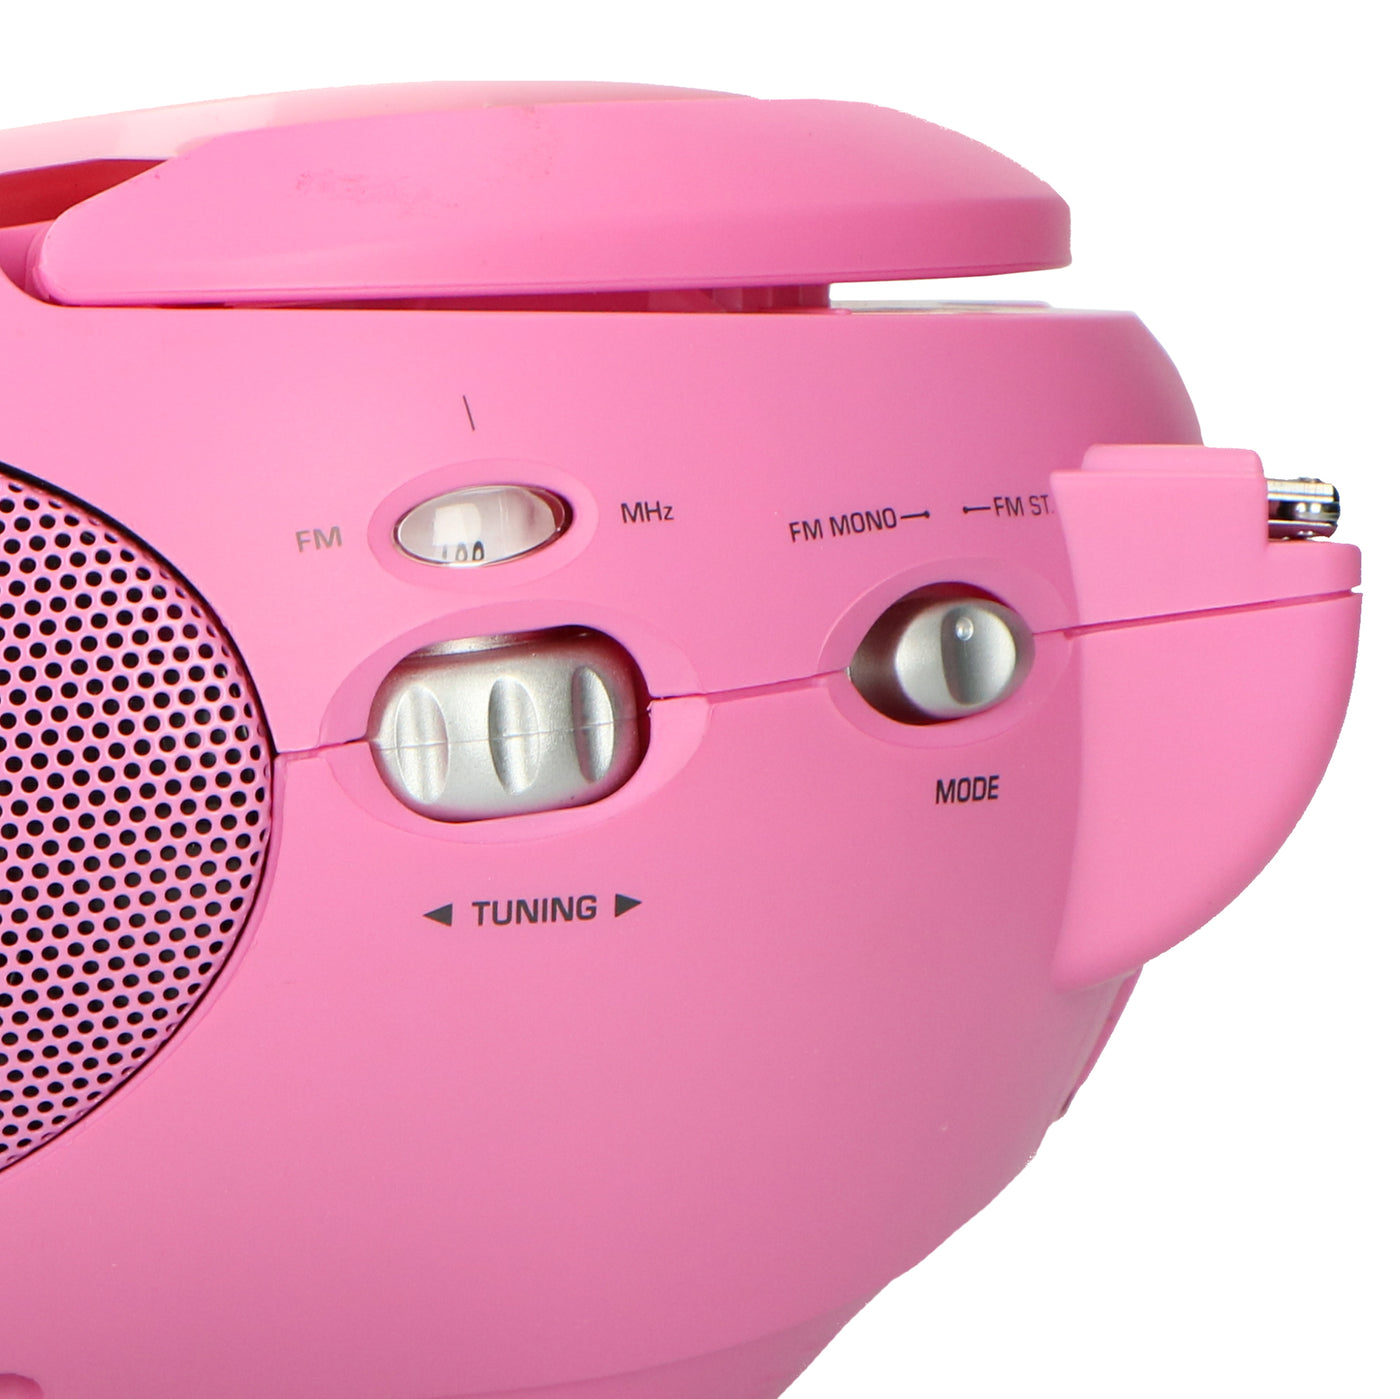 Lenco SCD-24 Pink - Tragbares FM-Radio mit CD-Player - Kopfhöreranschluß - Pink